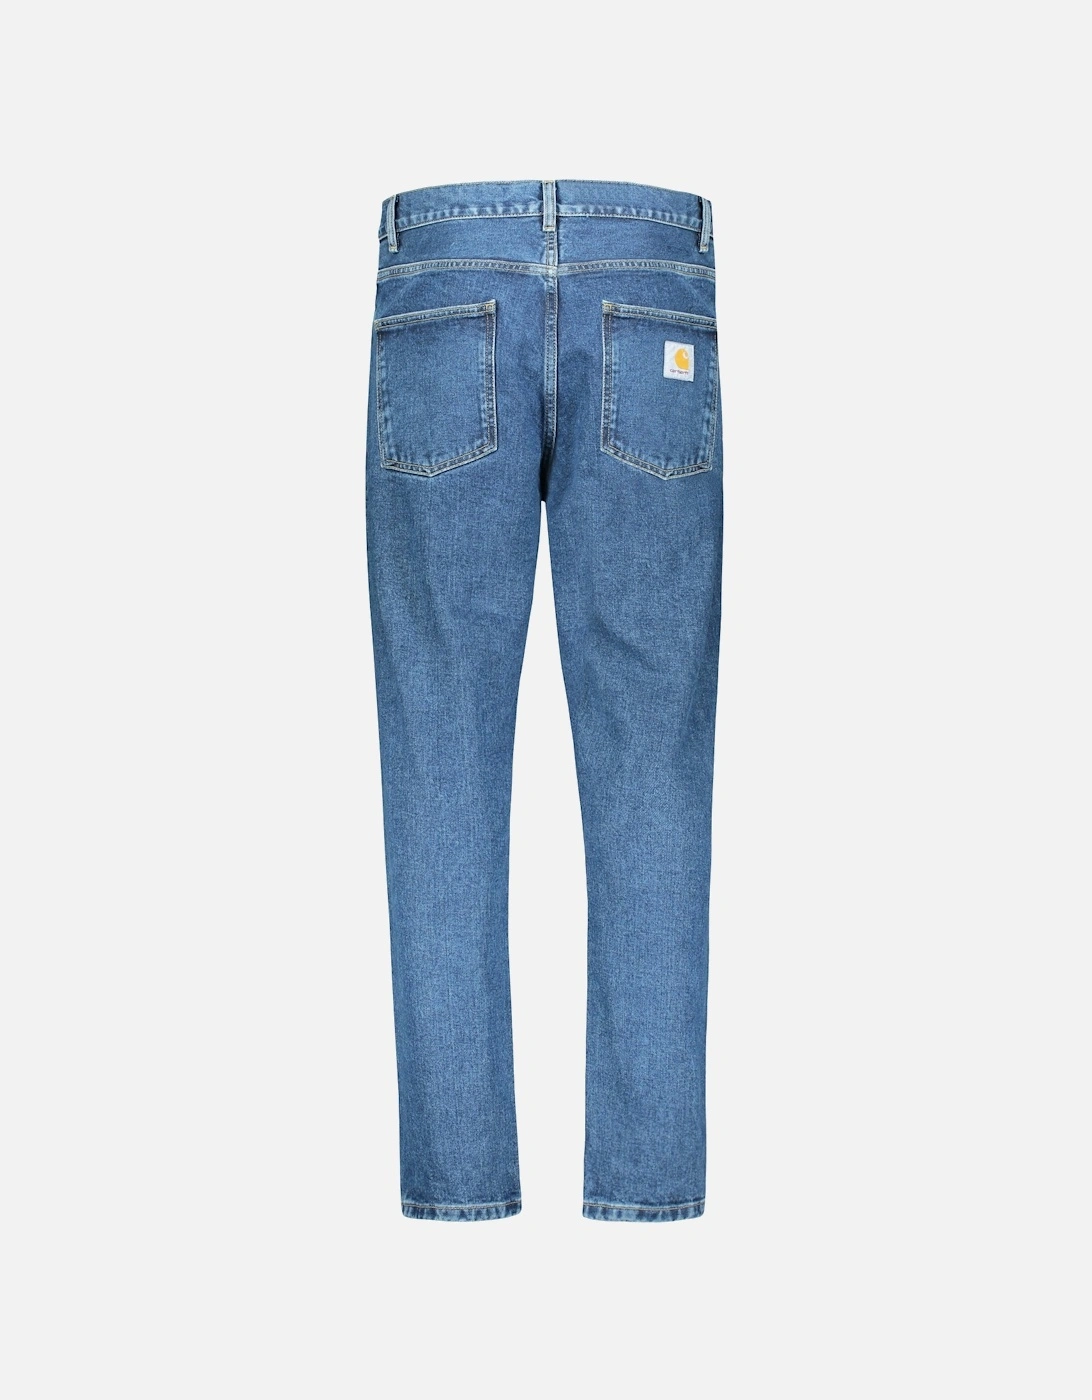 Carhartt Newel Pant Denim Blue Jeans